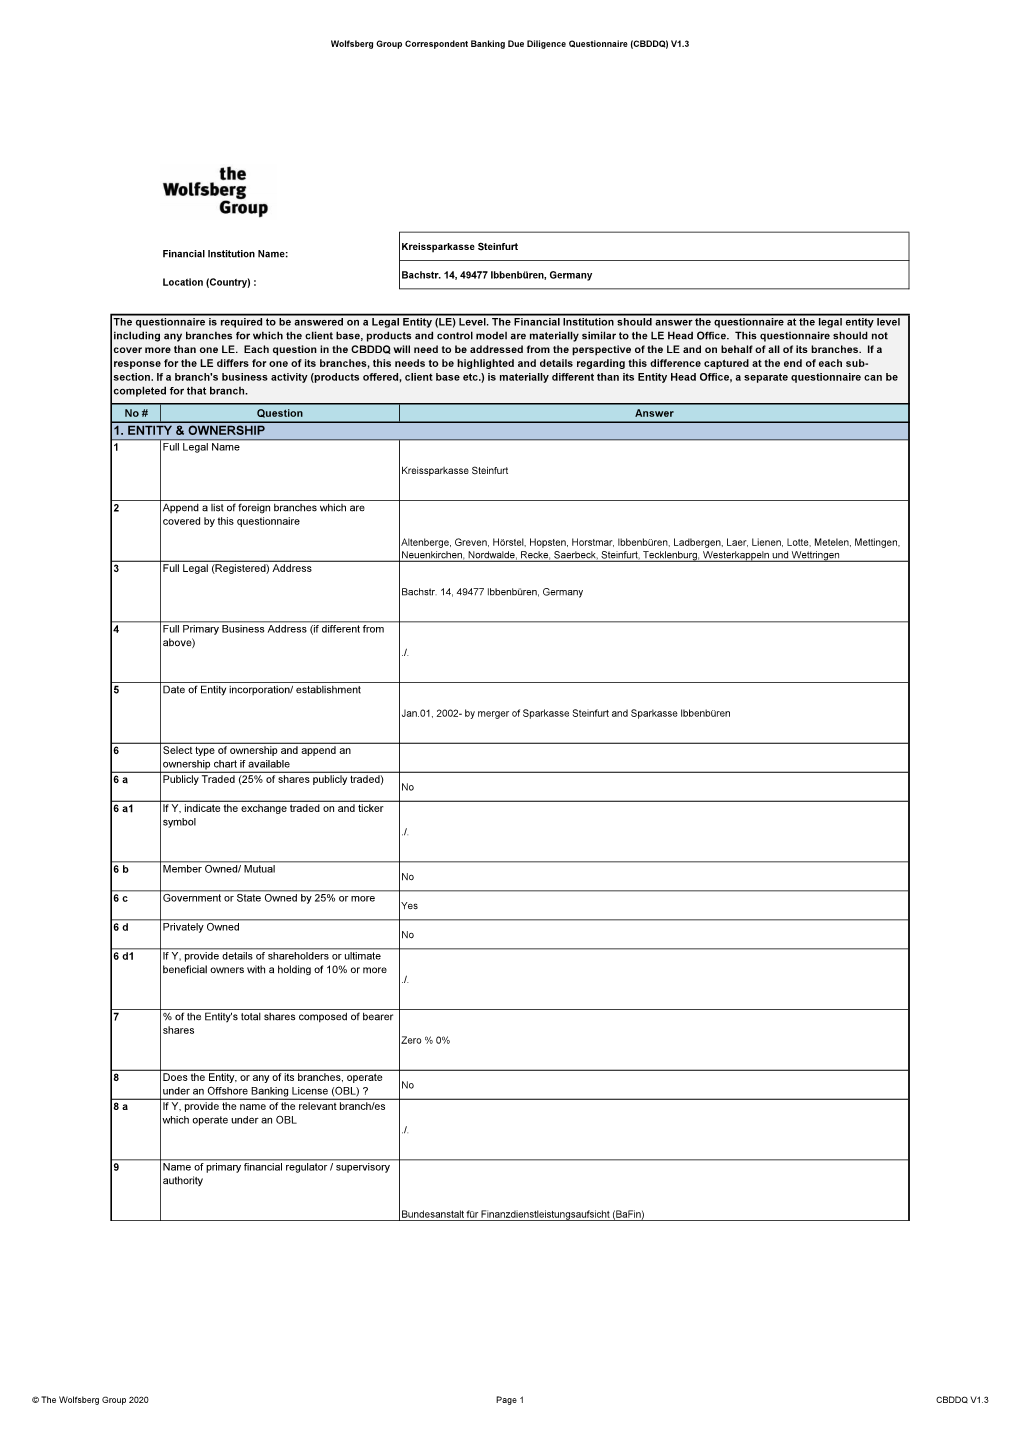 Wolfsberg Questionnaire